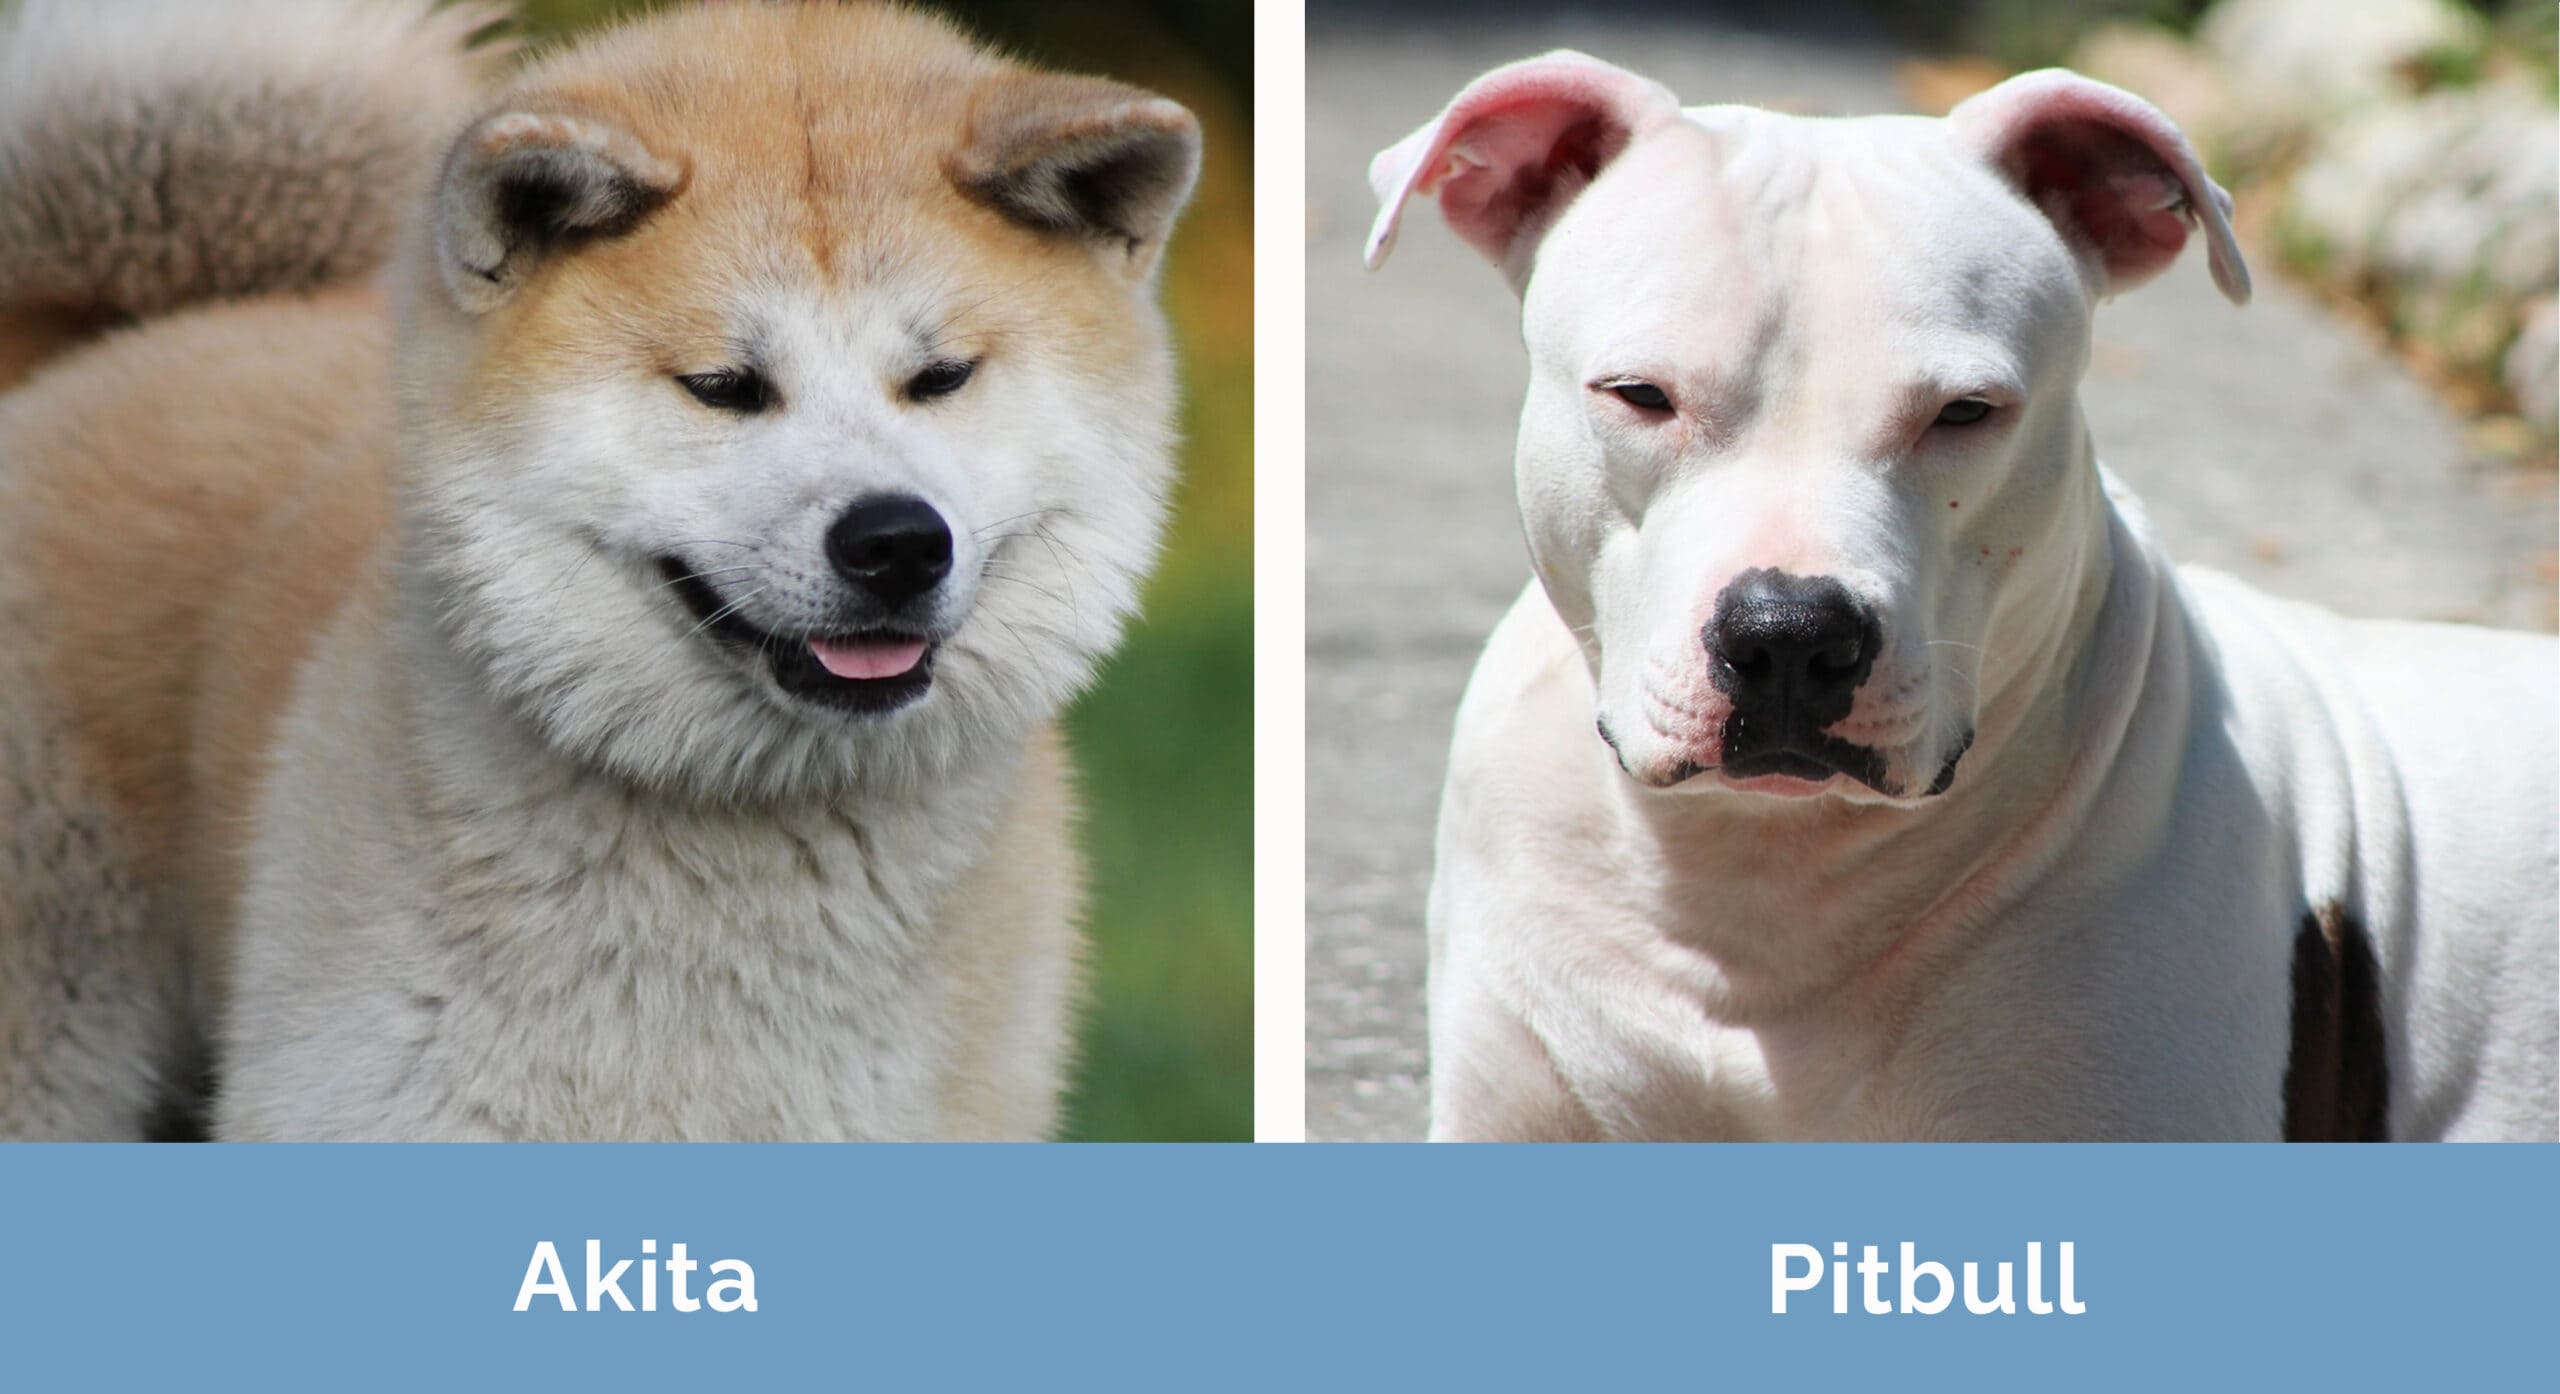 Akita vs Pitbull side by side